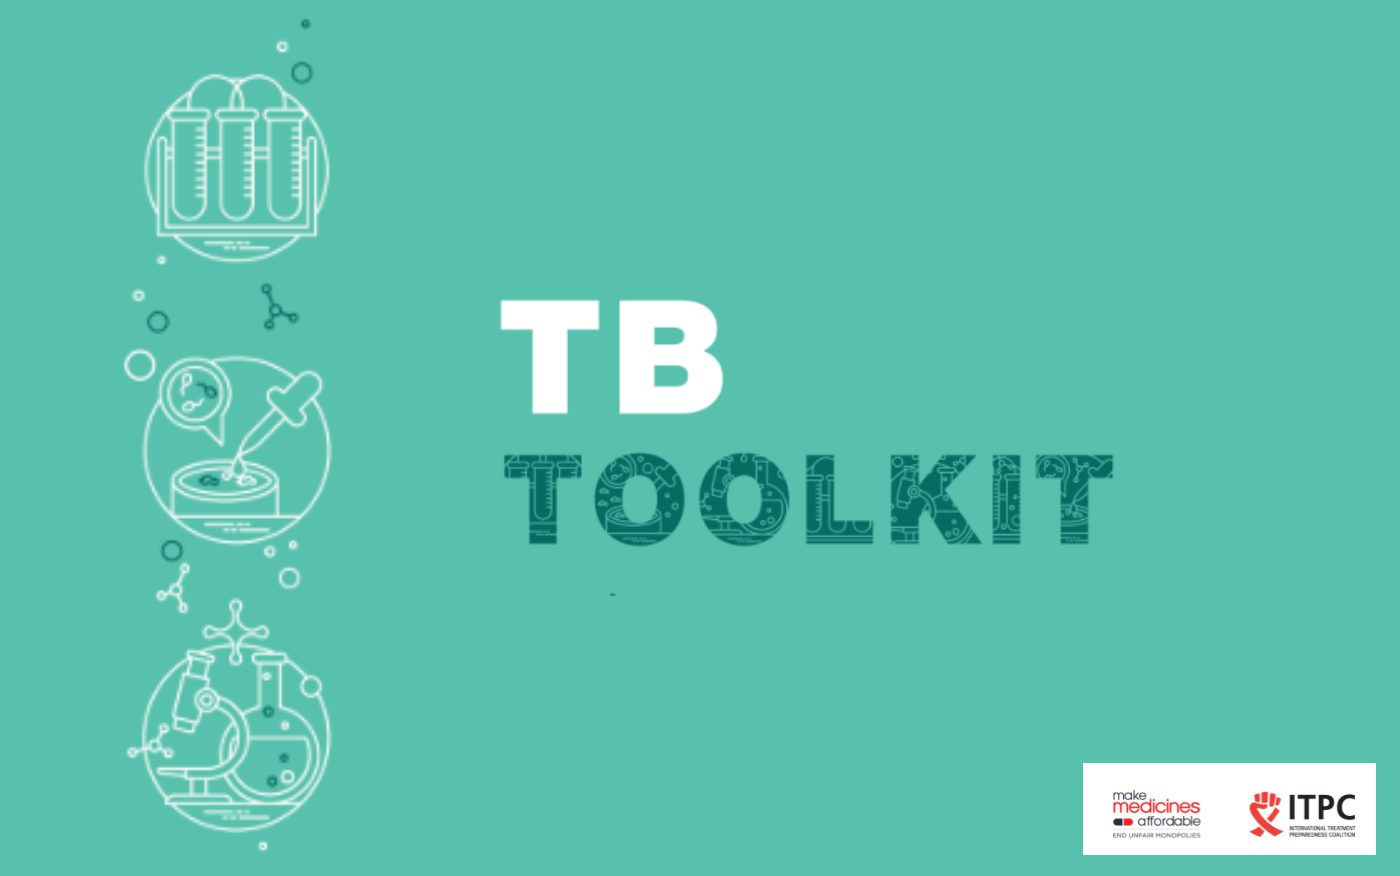 TB Community Toolkit